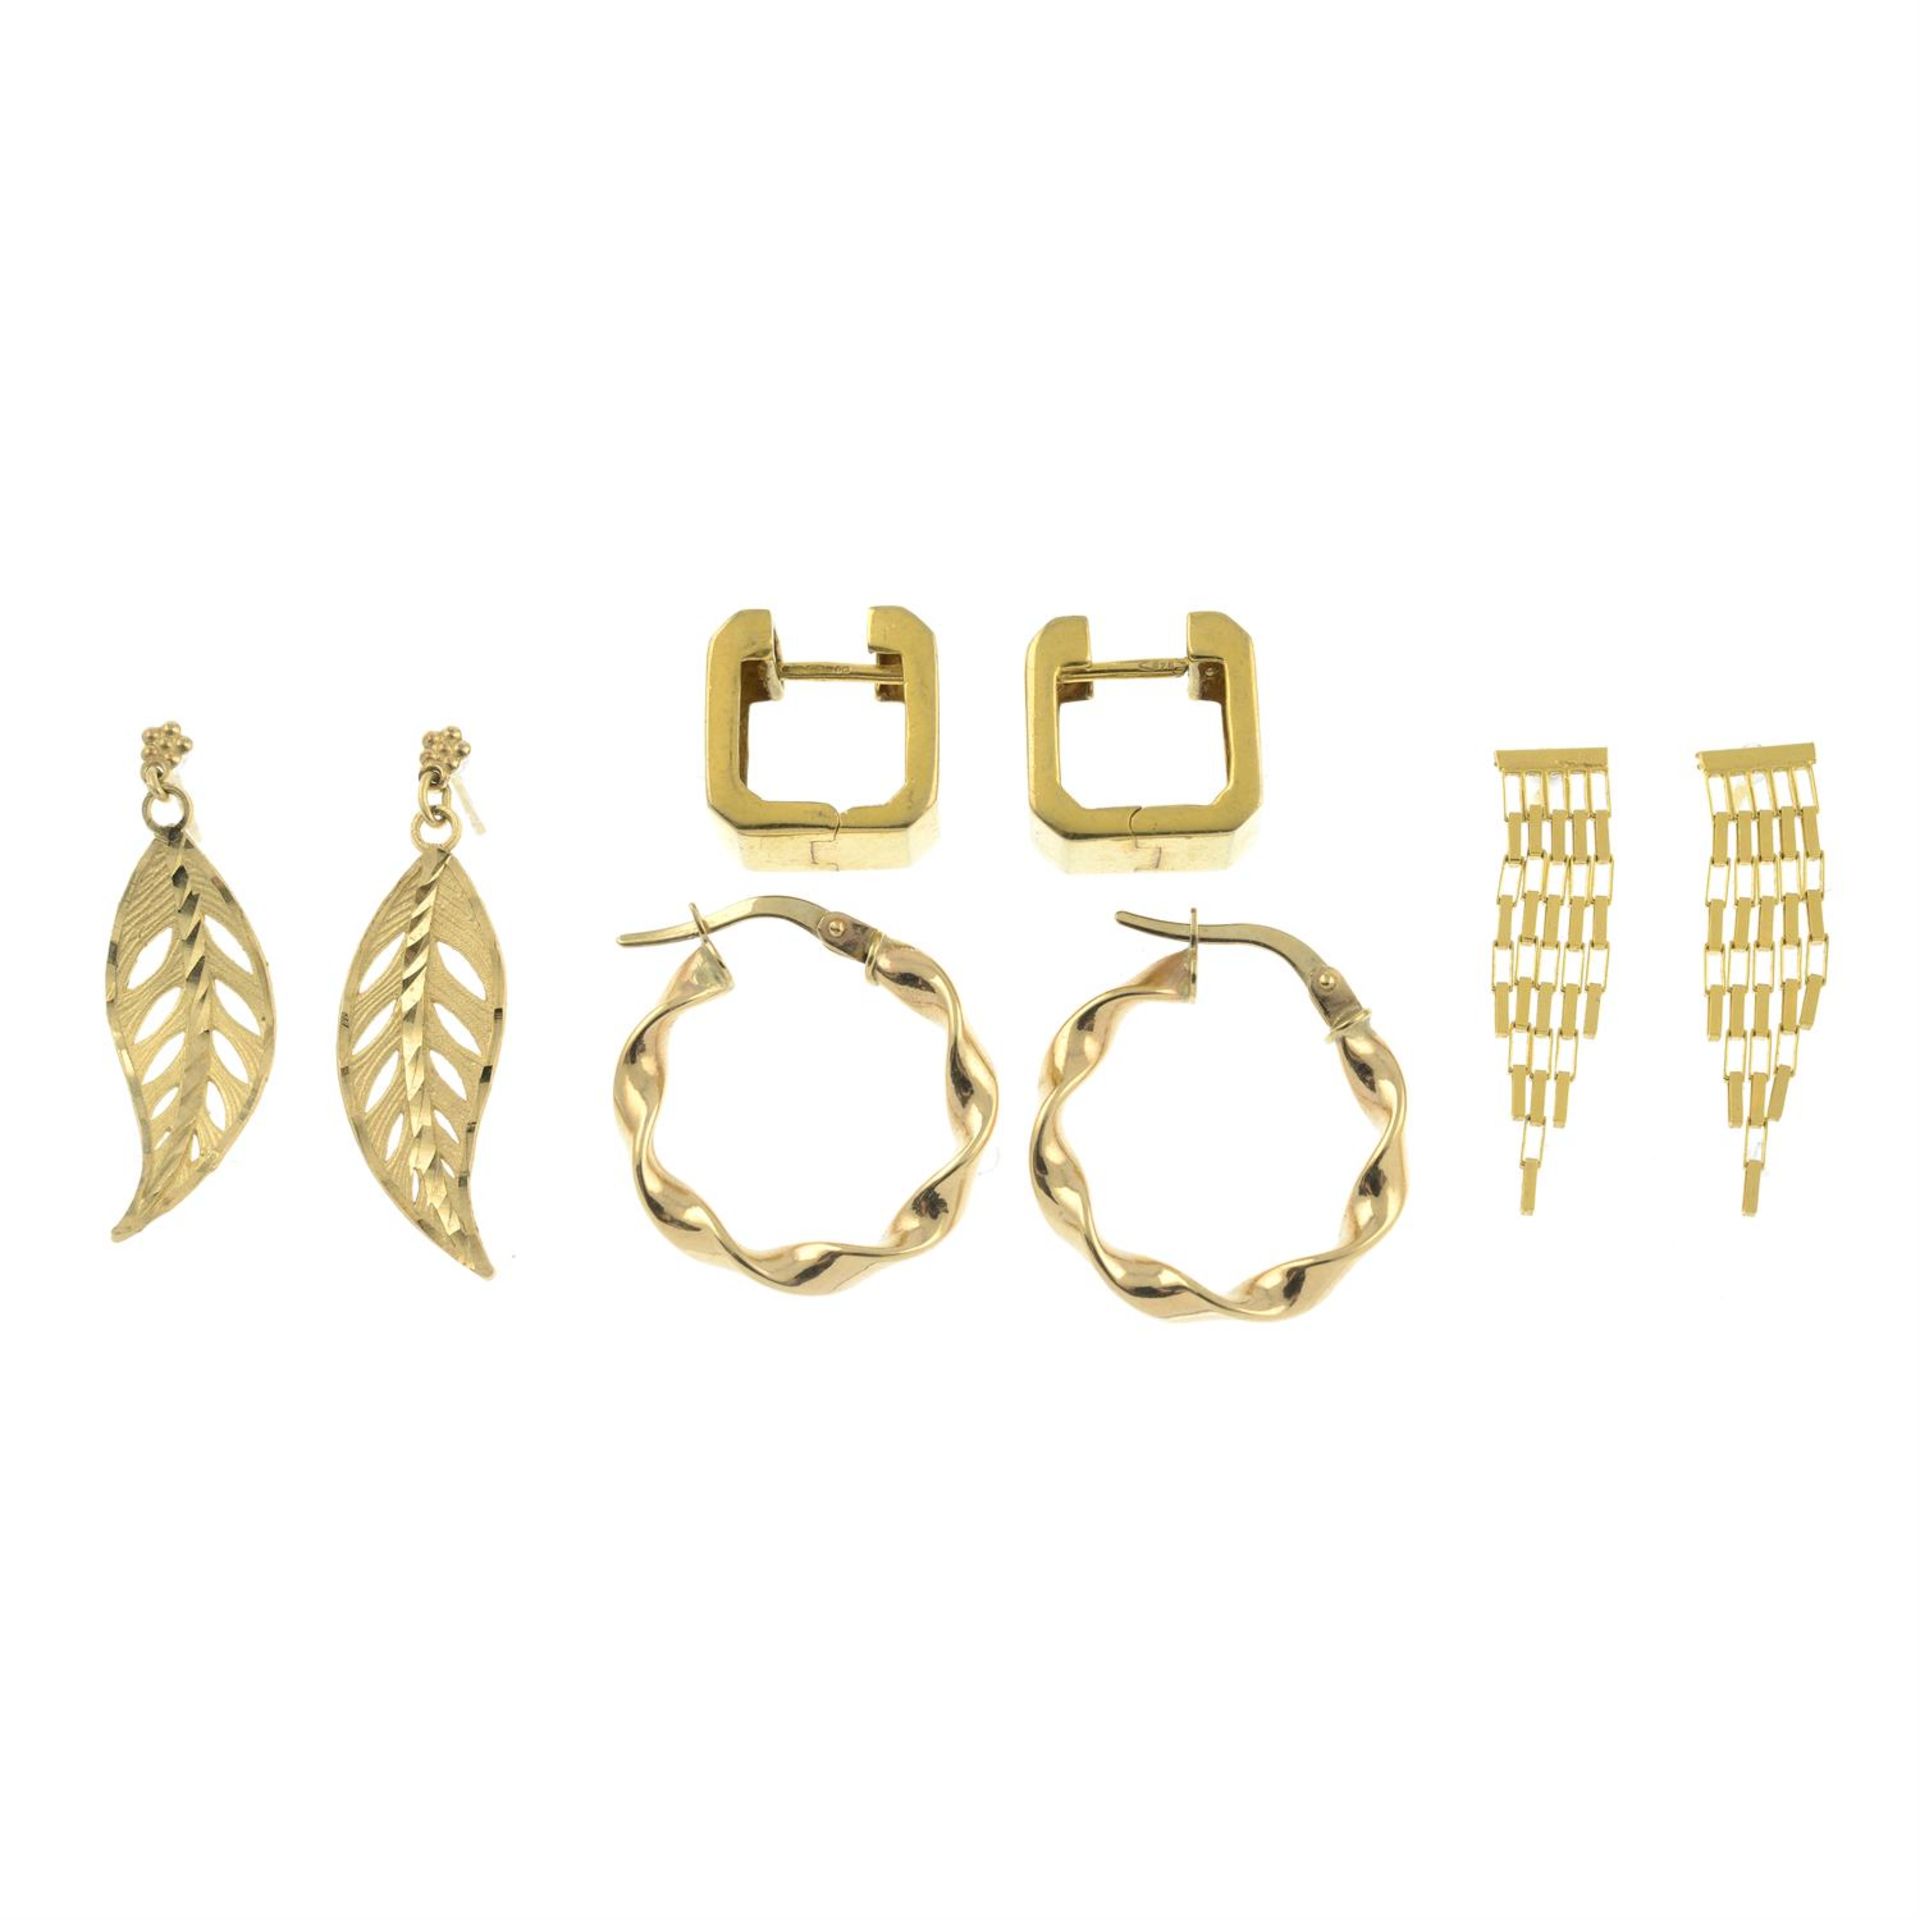 Four pairs of earrings.